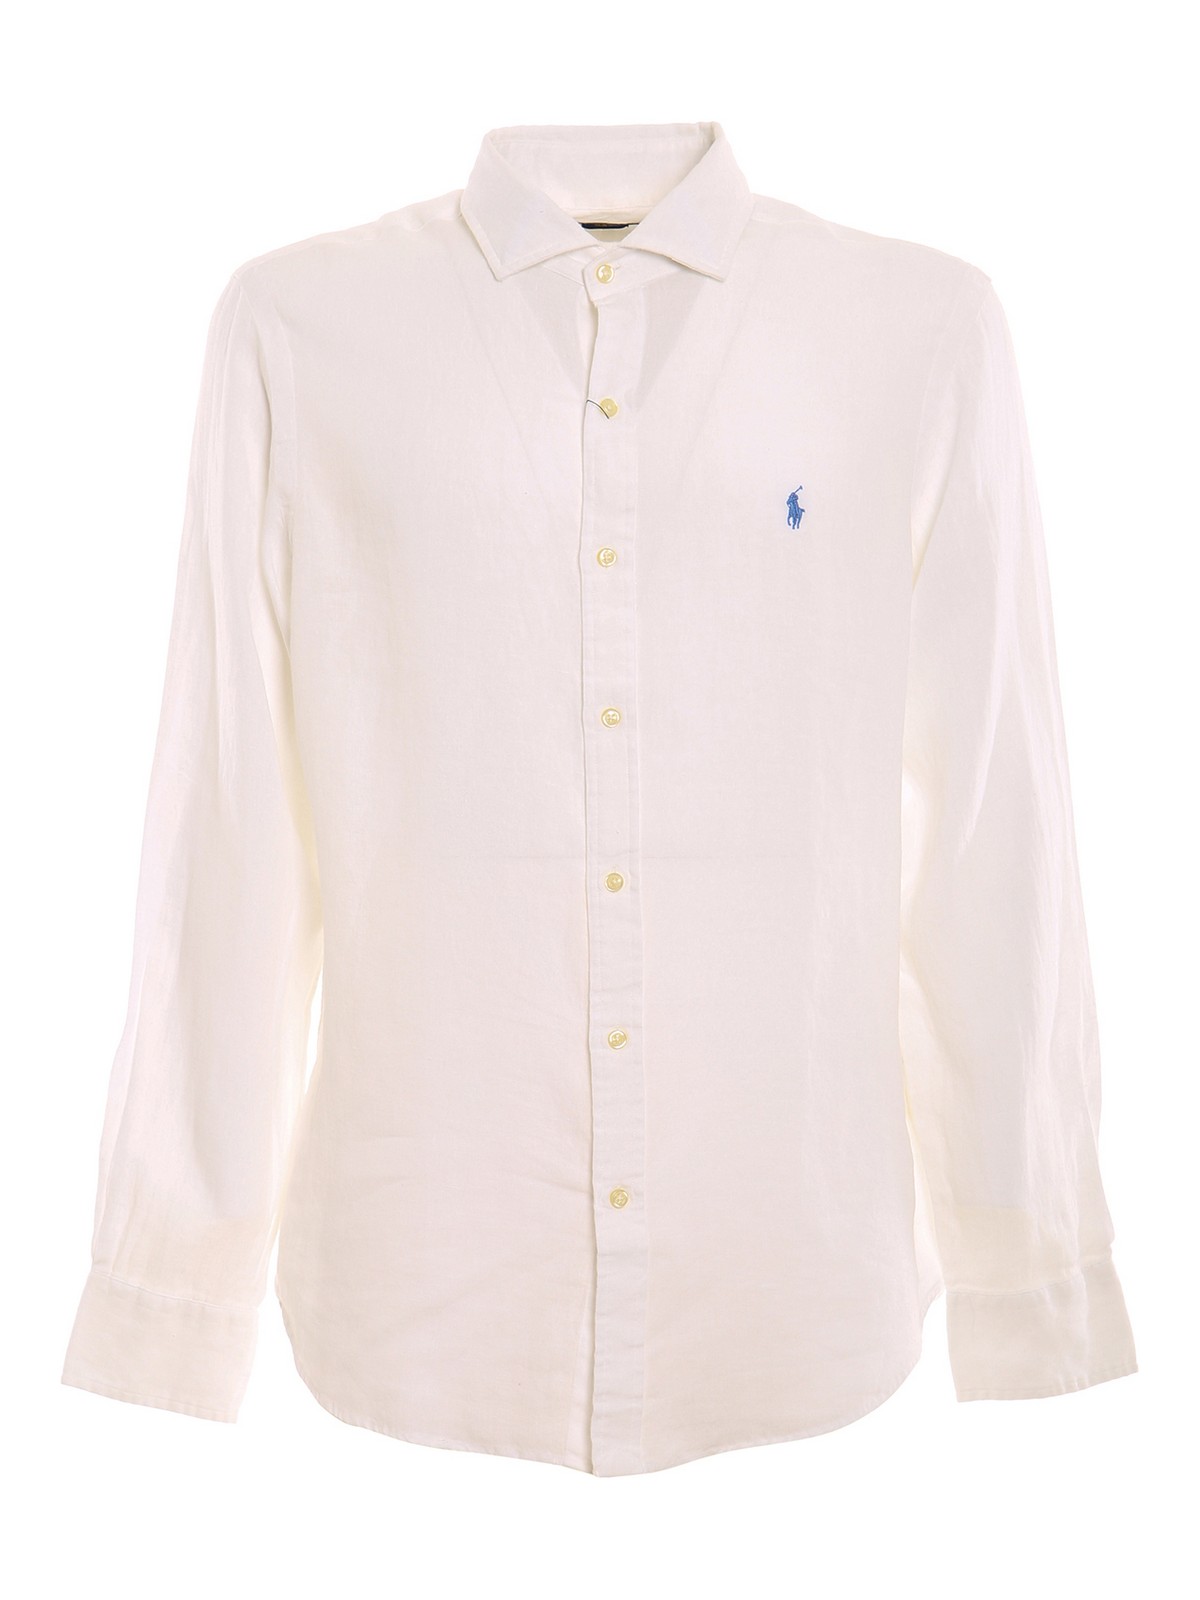 Polo Ralph Lauren Linen Shirt In White